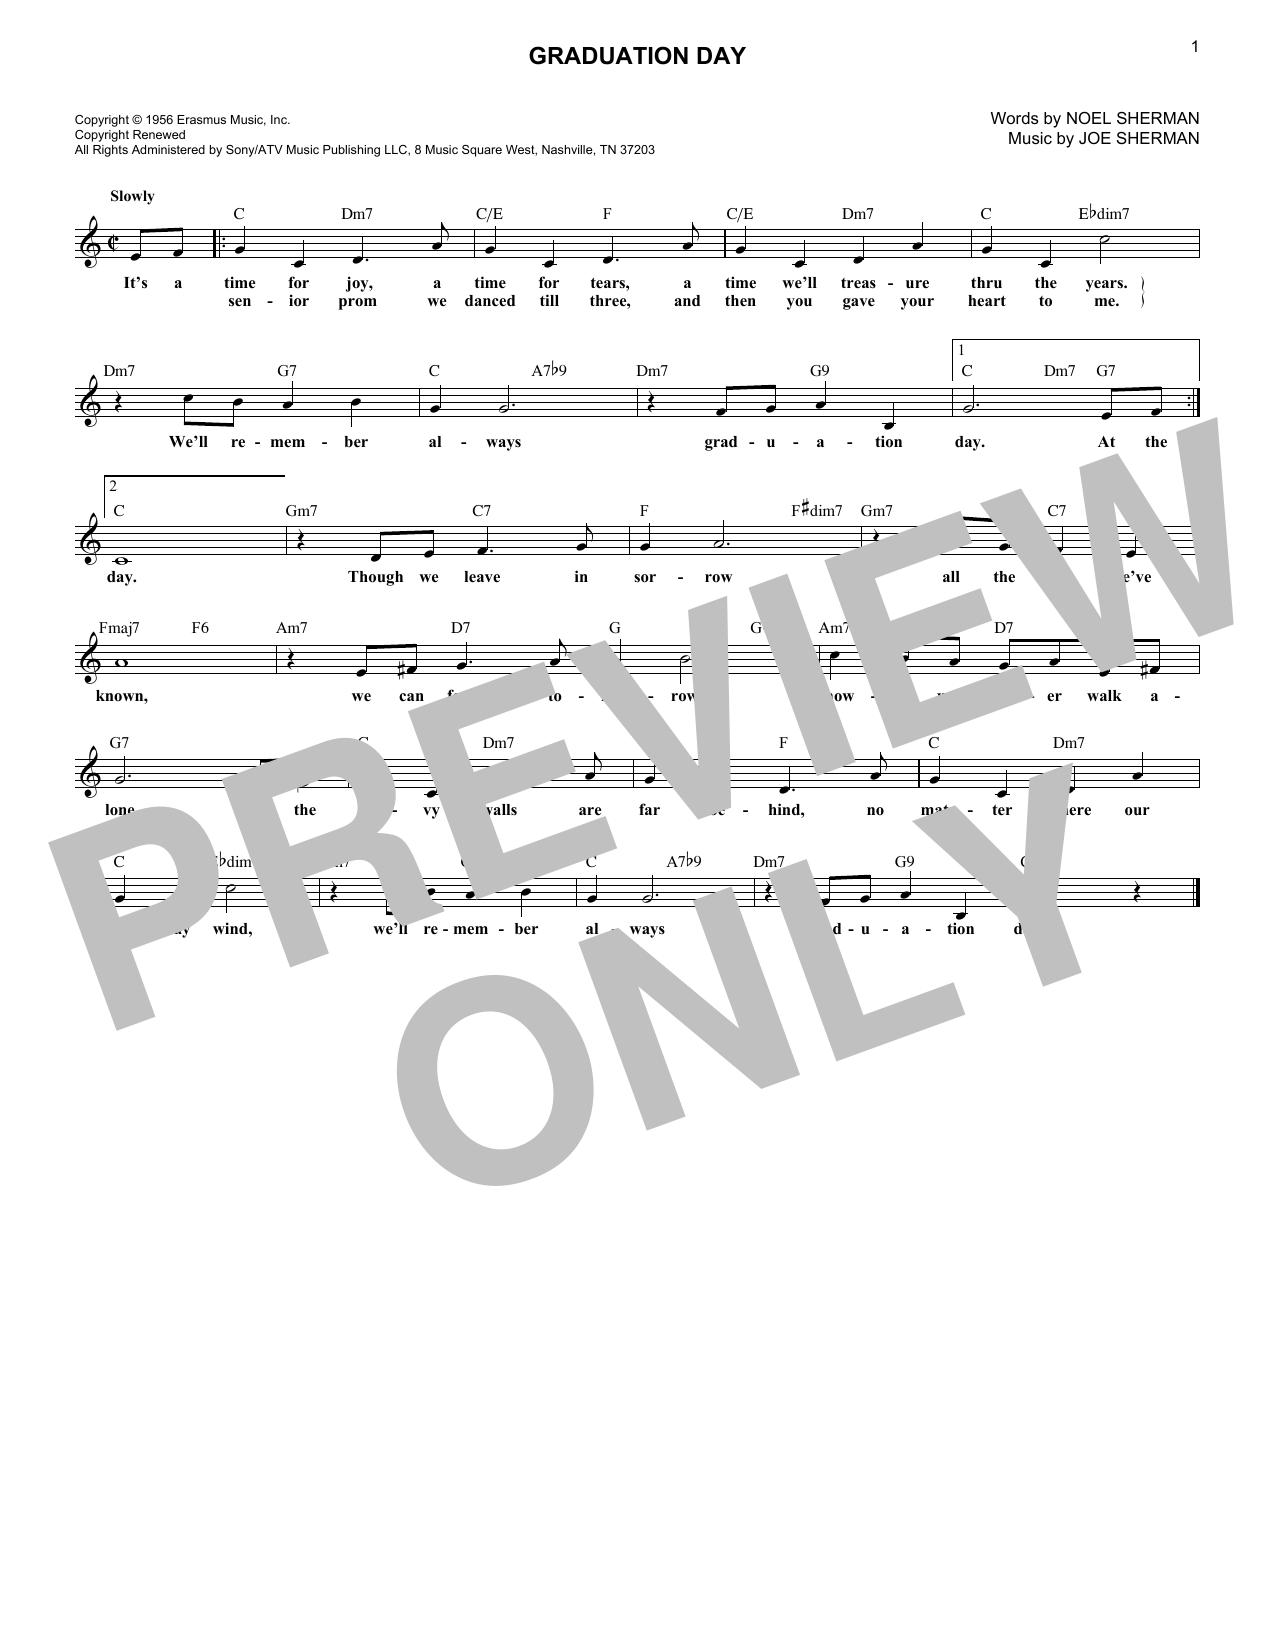 Noel Sherman Graduation Day Sheet Music Notes & Chords for Lead Sheet / Fake Book - Download or Print PDF